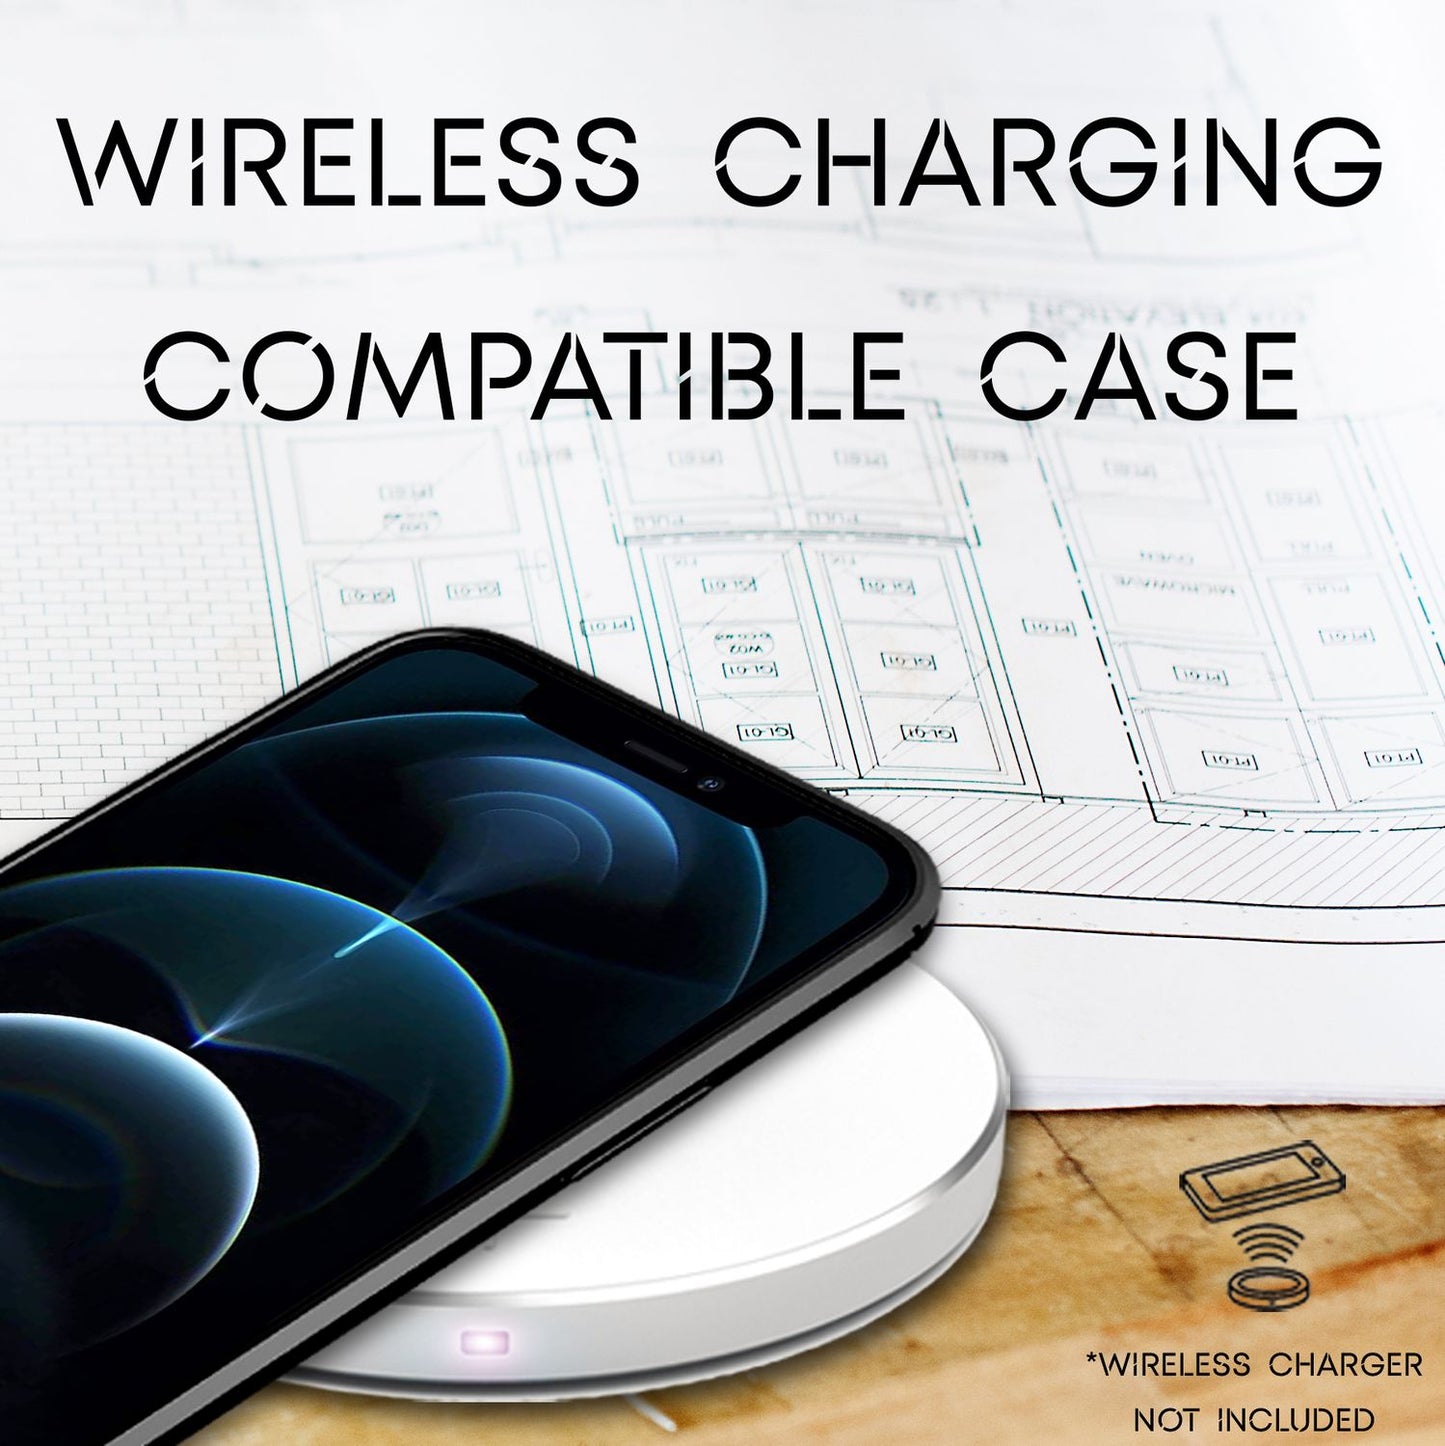 NALIA Leder Case für iPhone 12 / iPhone 12 Pro, Silikon Handy Hülle Cover Etui